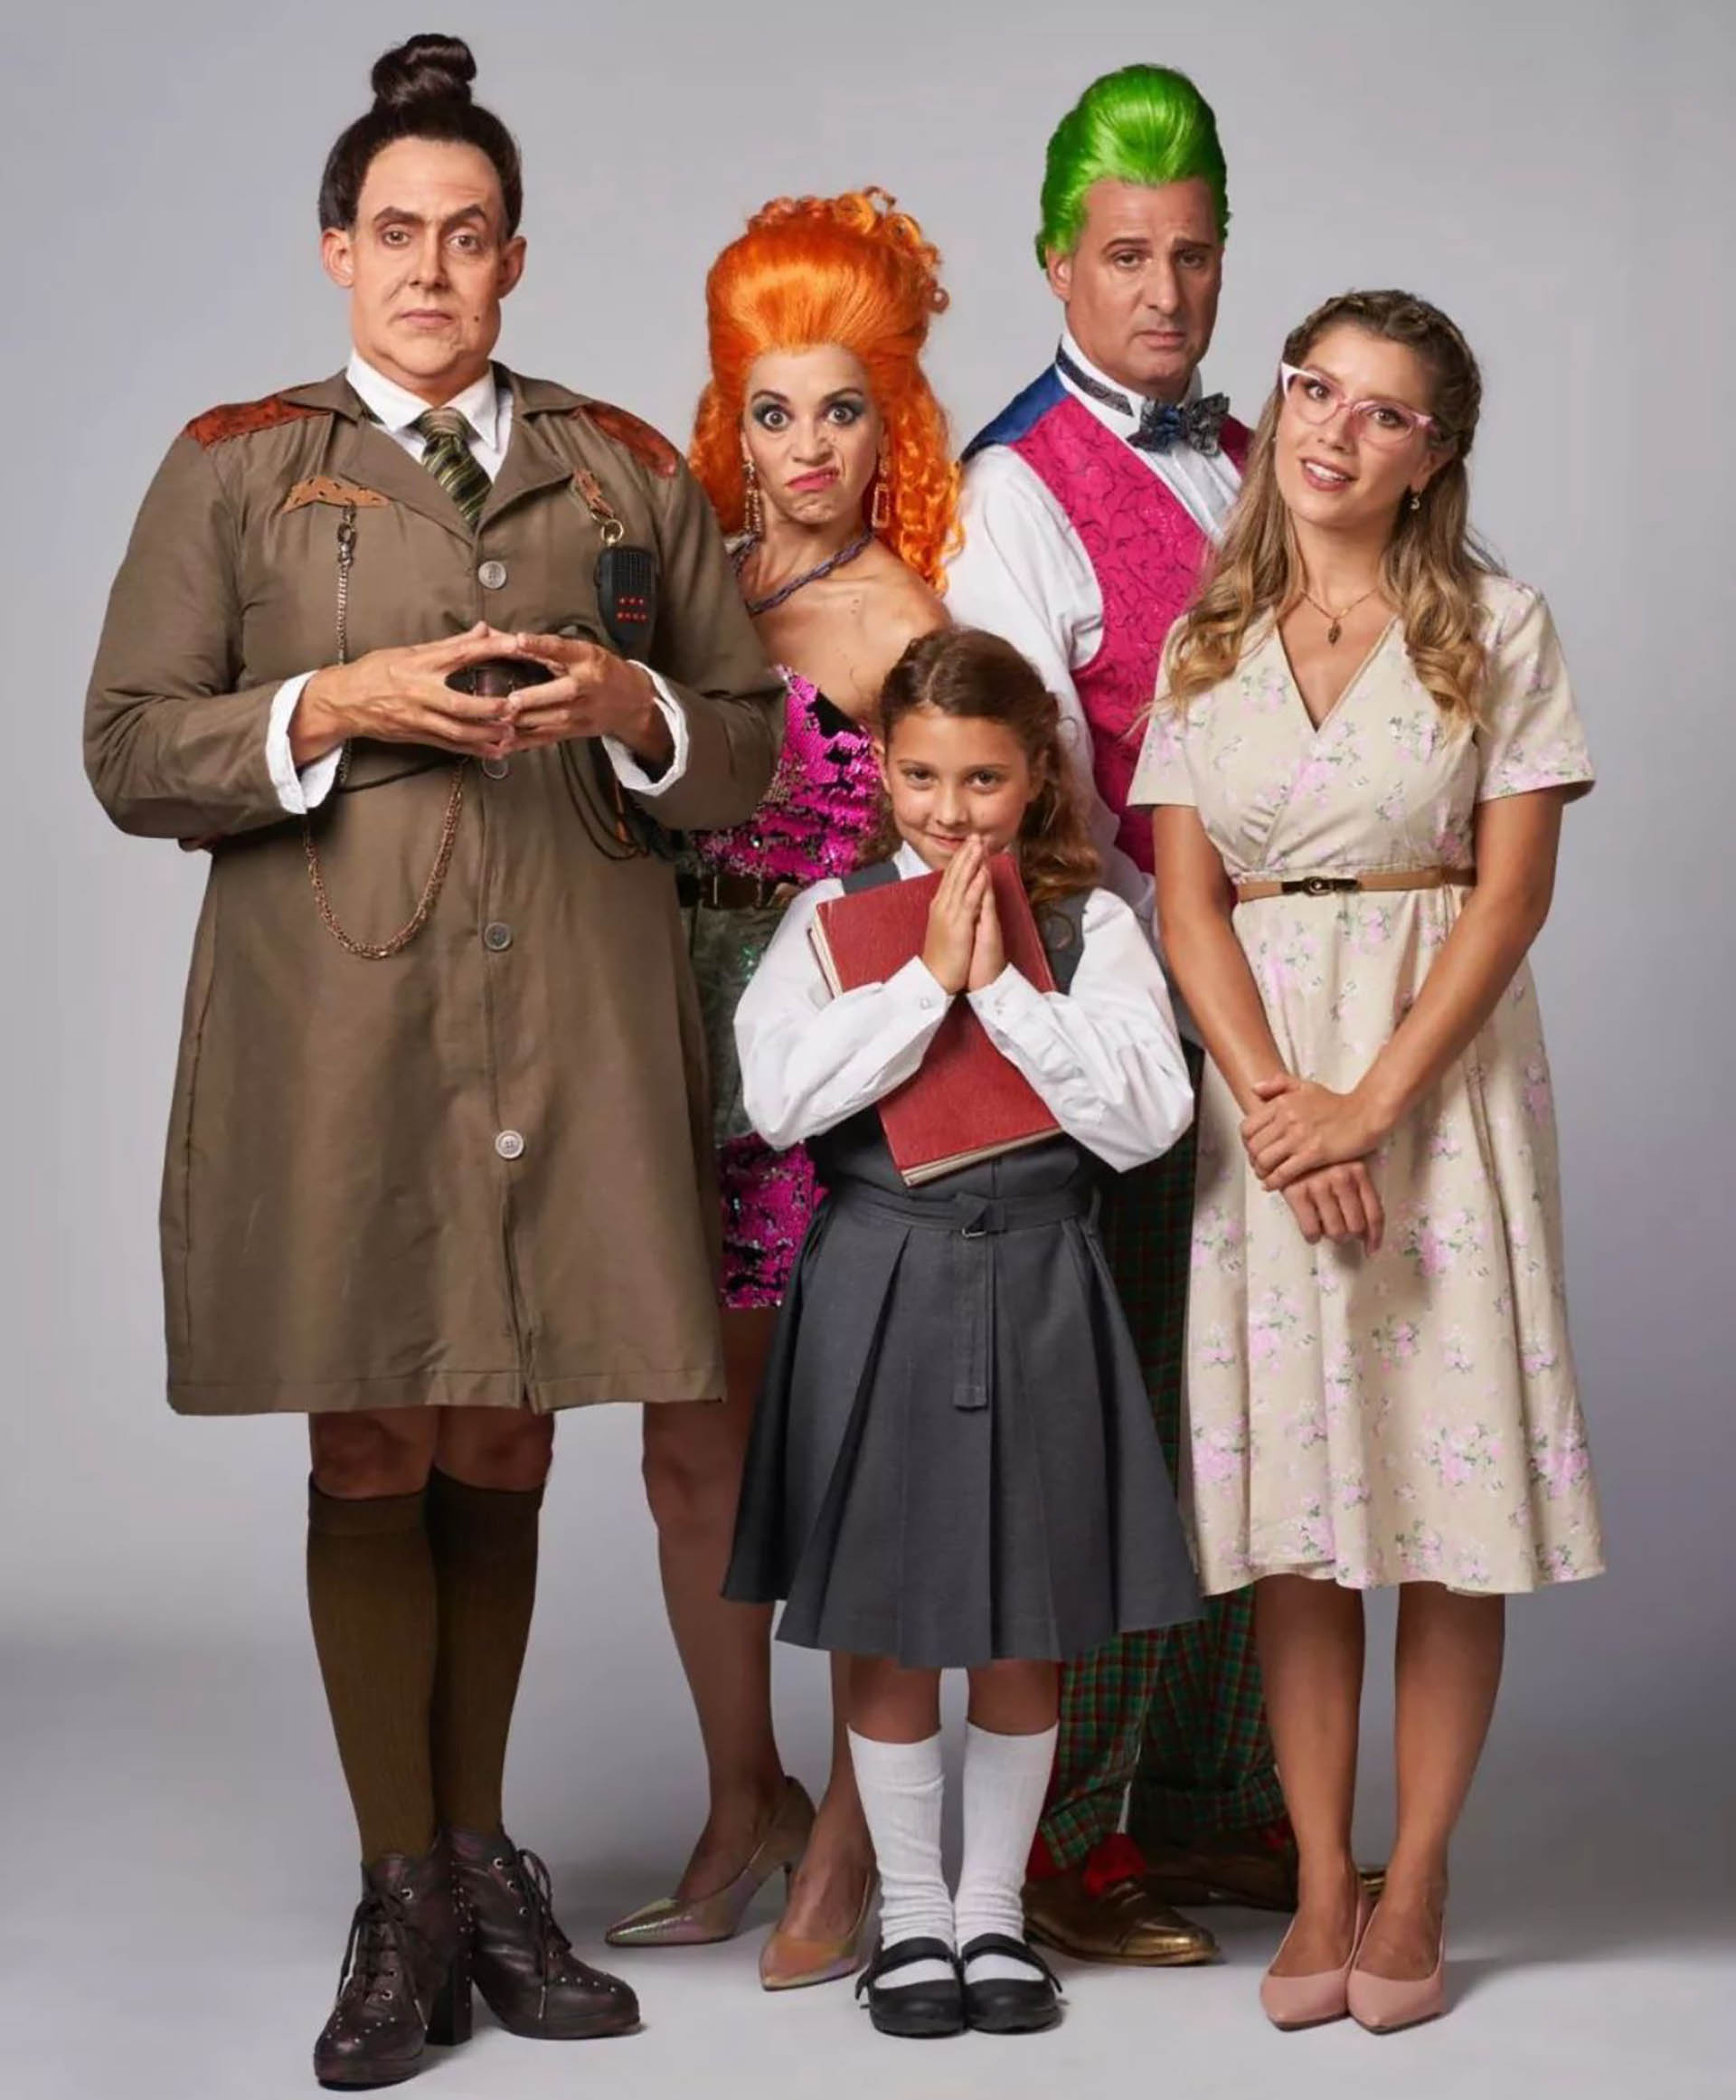 El elenco de Matilda, el musical